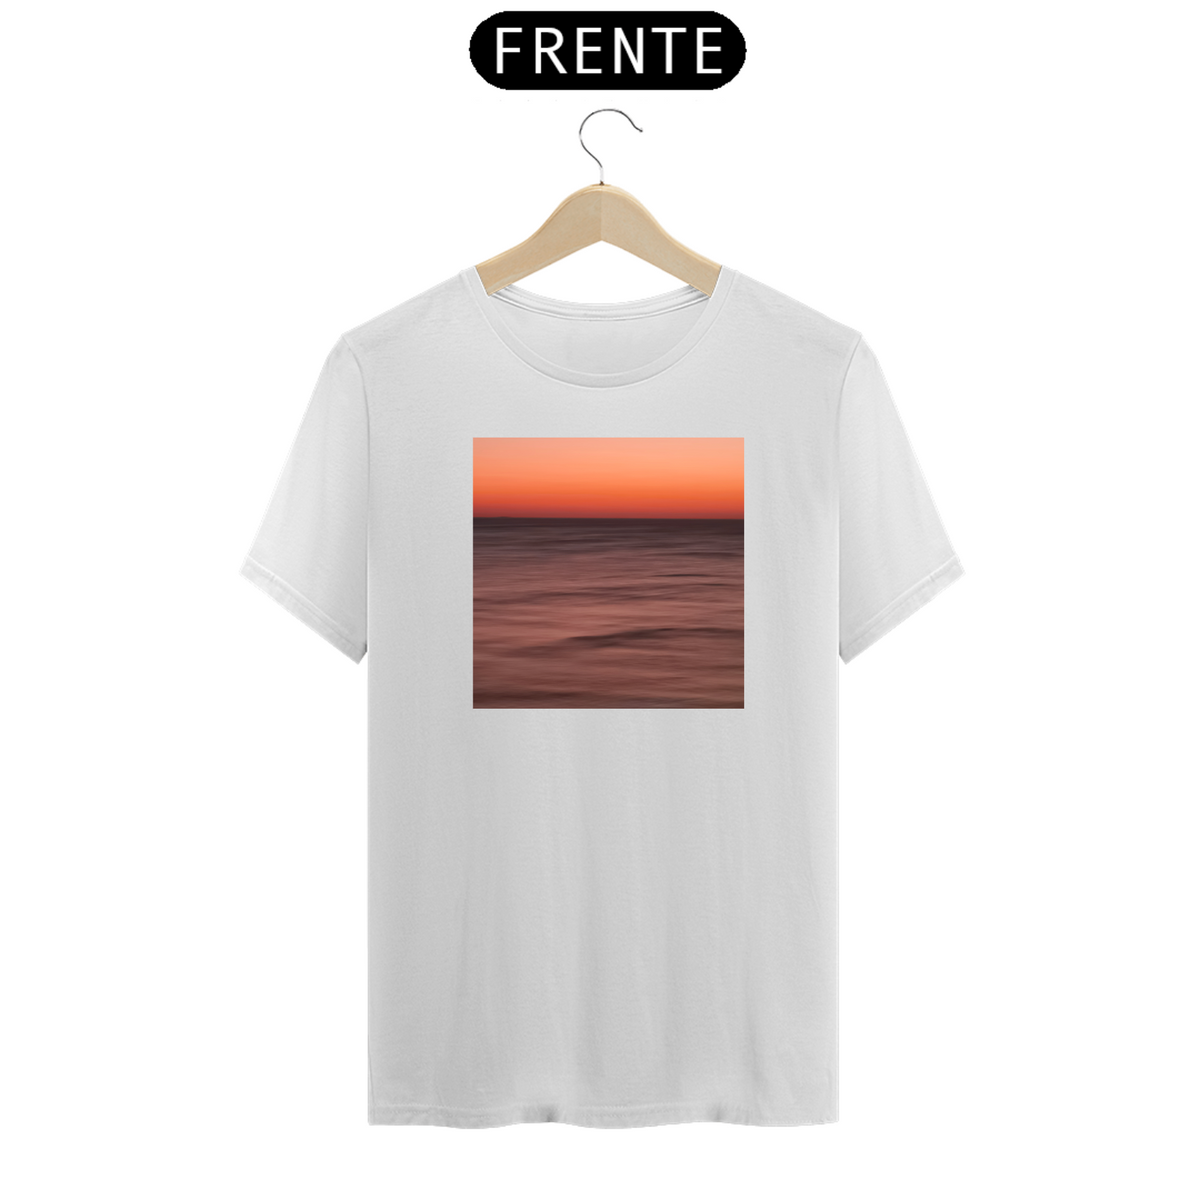 Nome do produto: Tshirt sunset